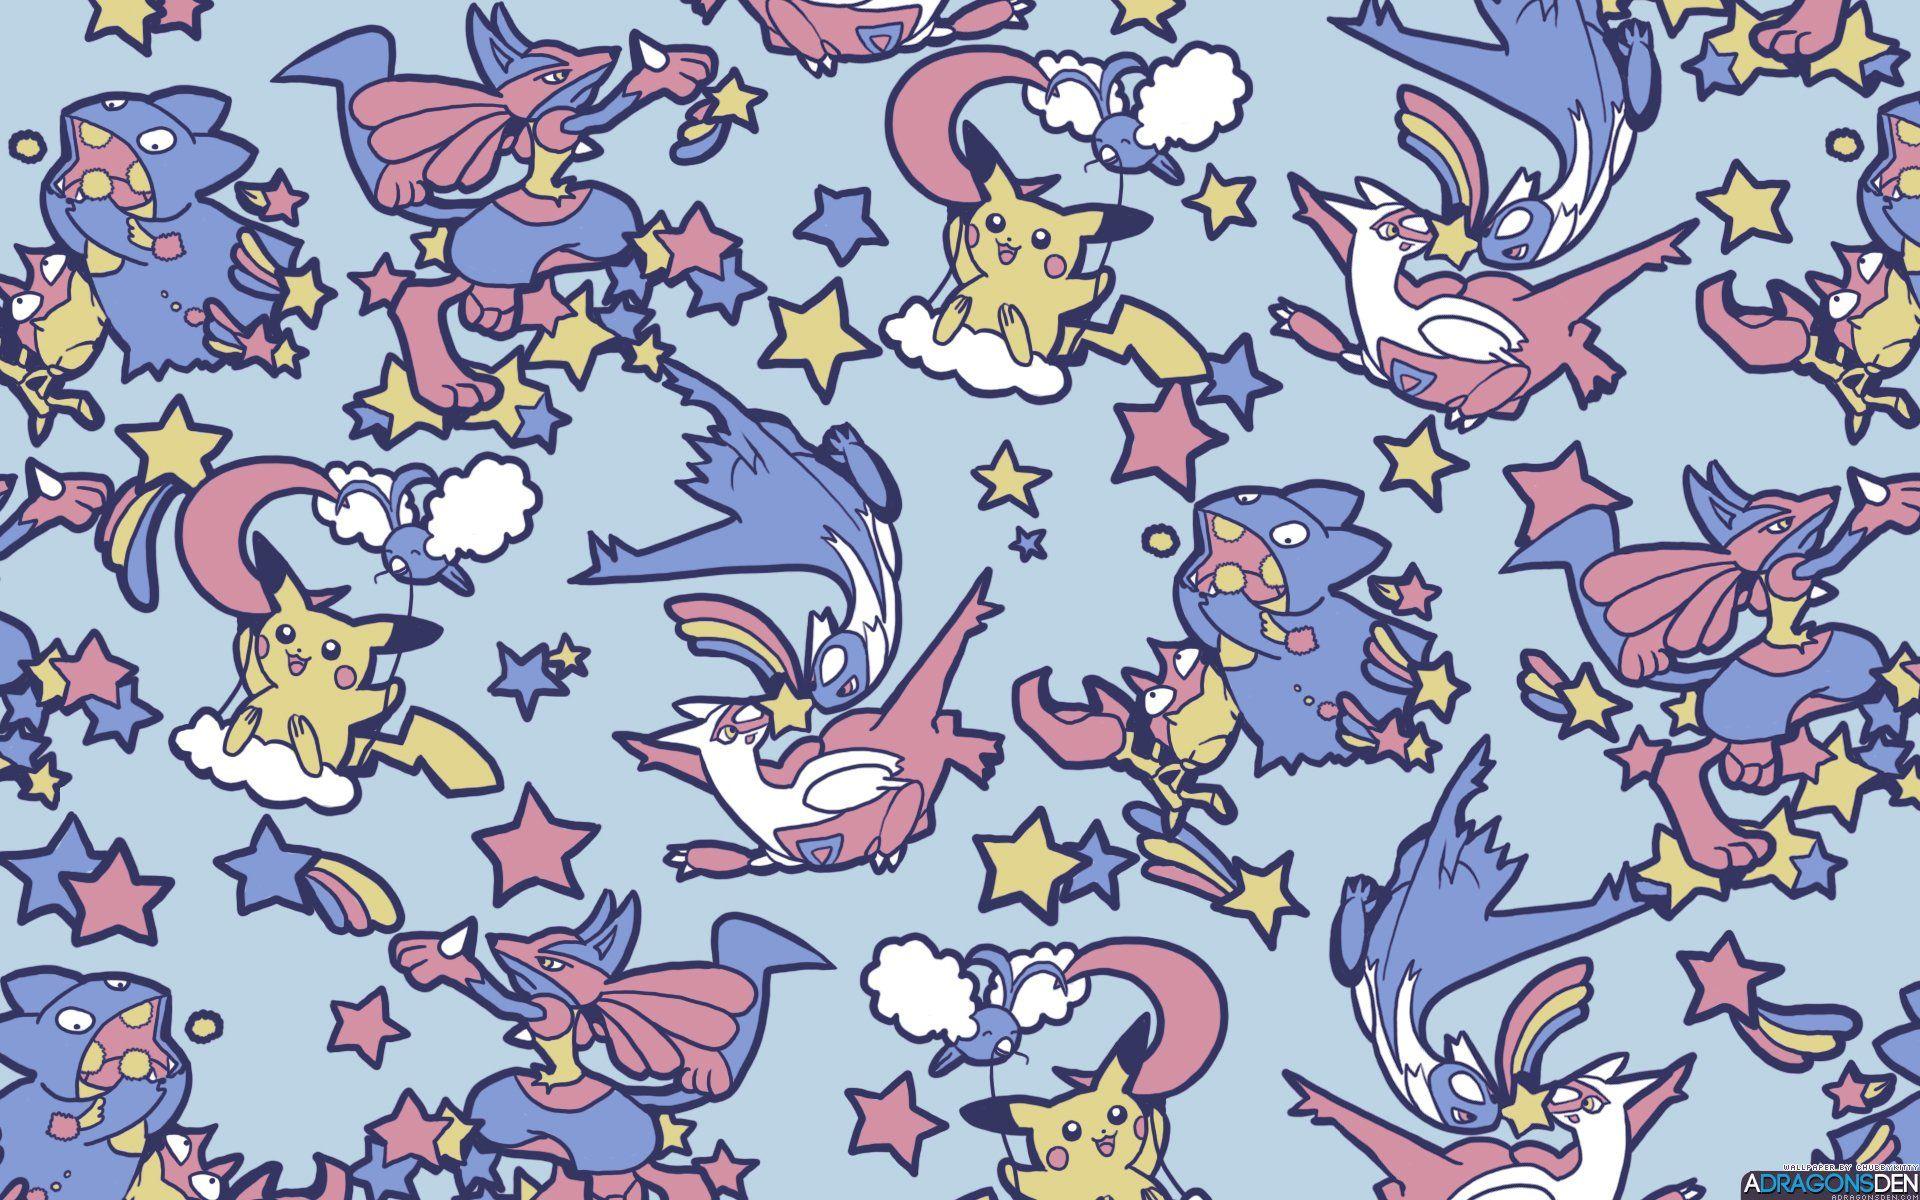 Latias (Pokémon) HD Wallpaper and Background Image